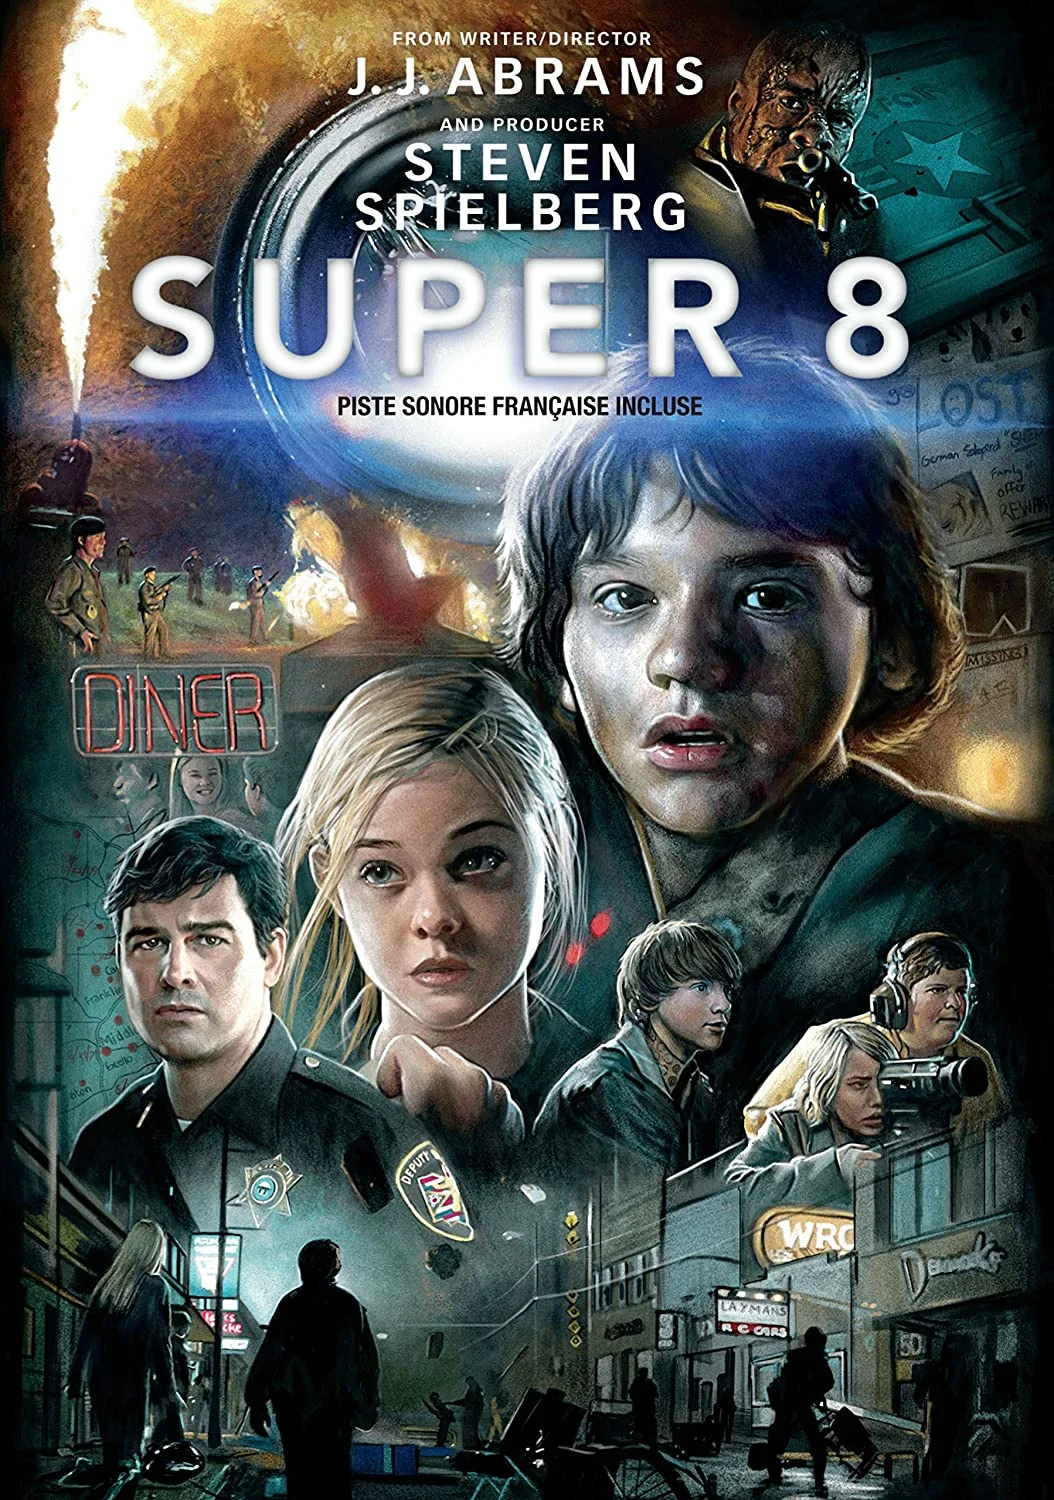 Super 8 (DVD) on MovieShack